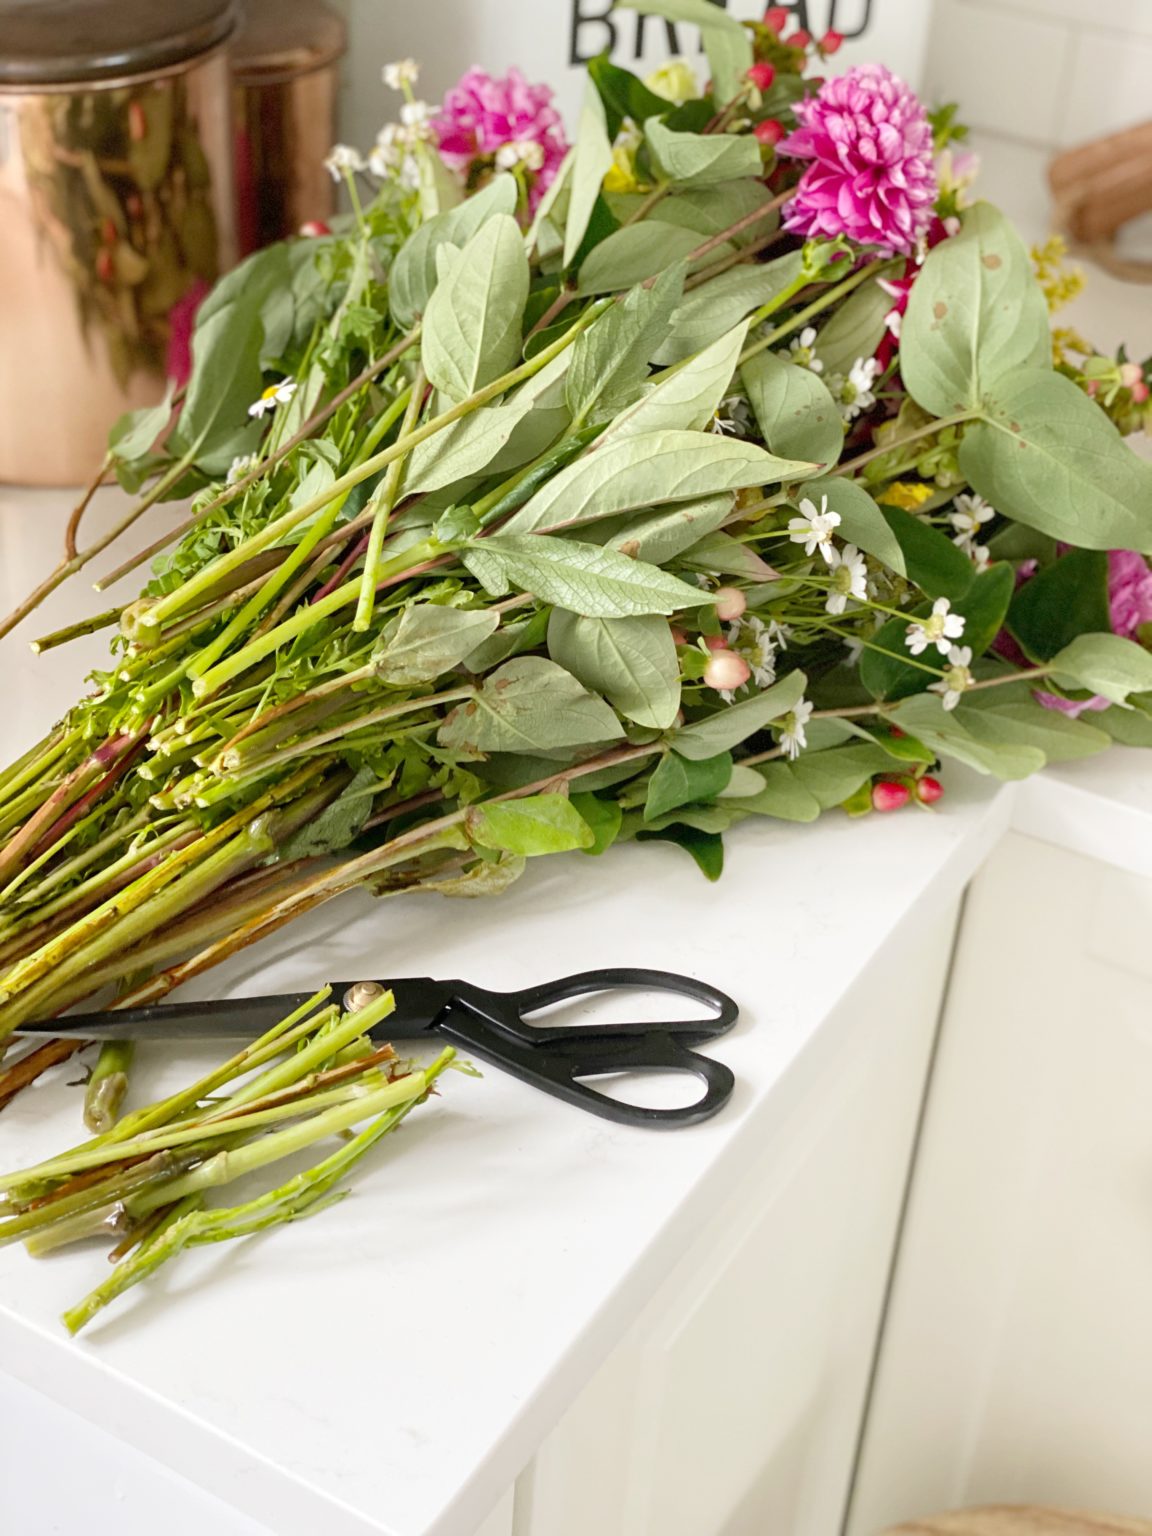 How to arrange grocery store flowers 5 ways